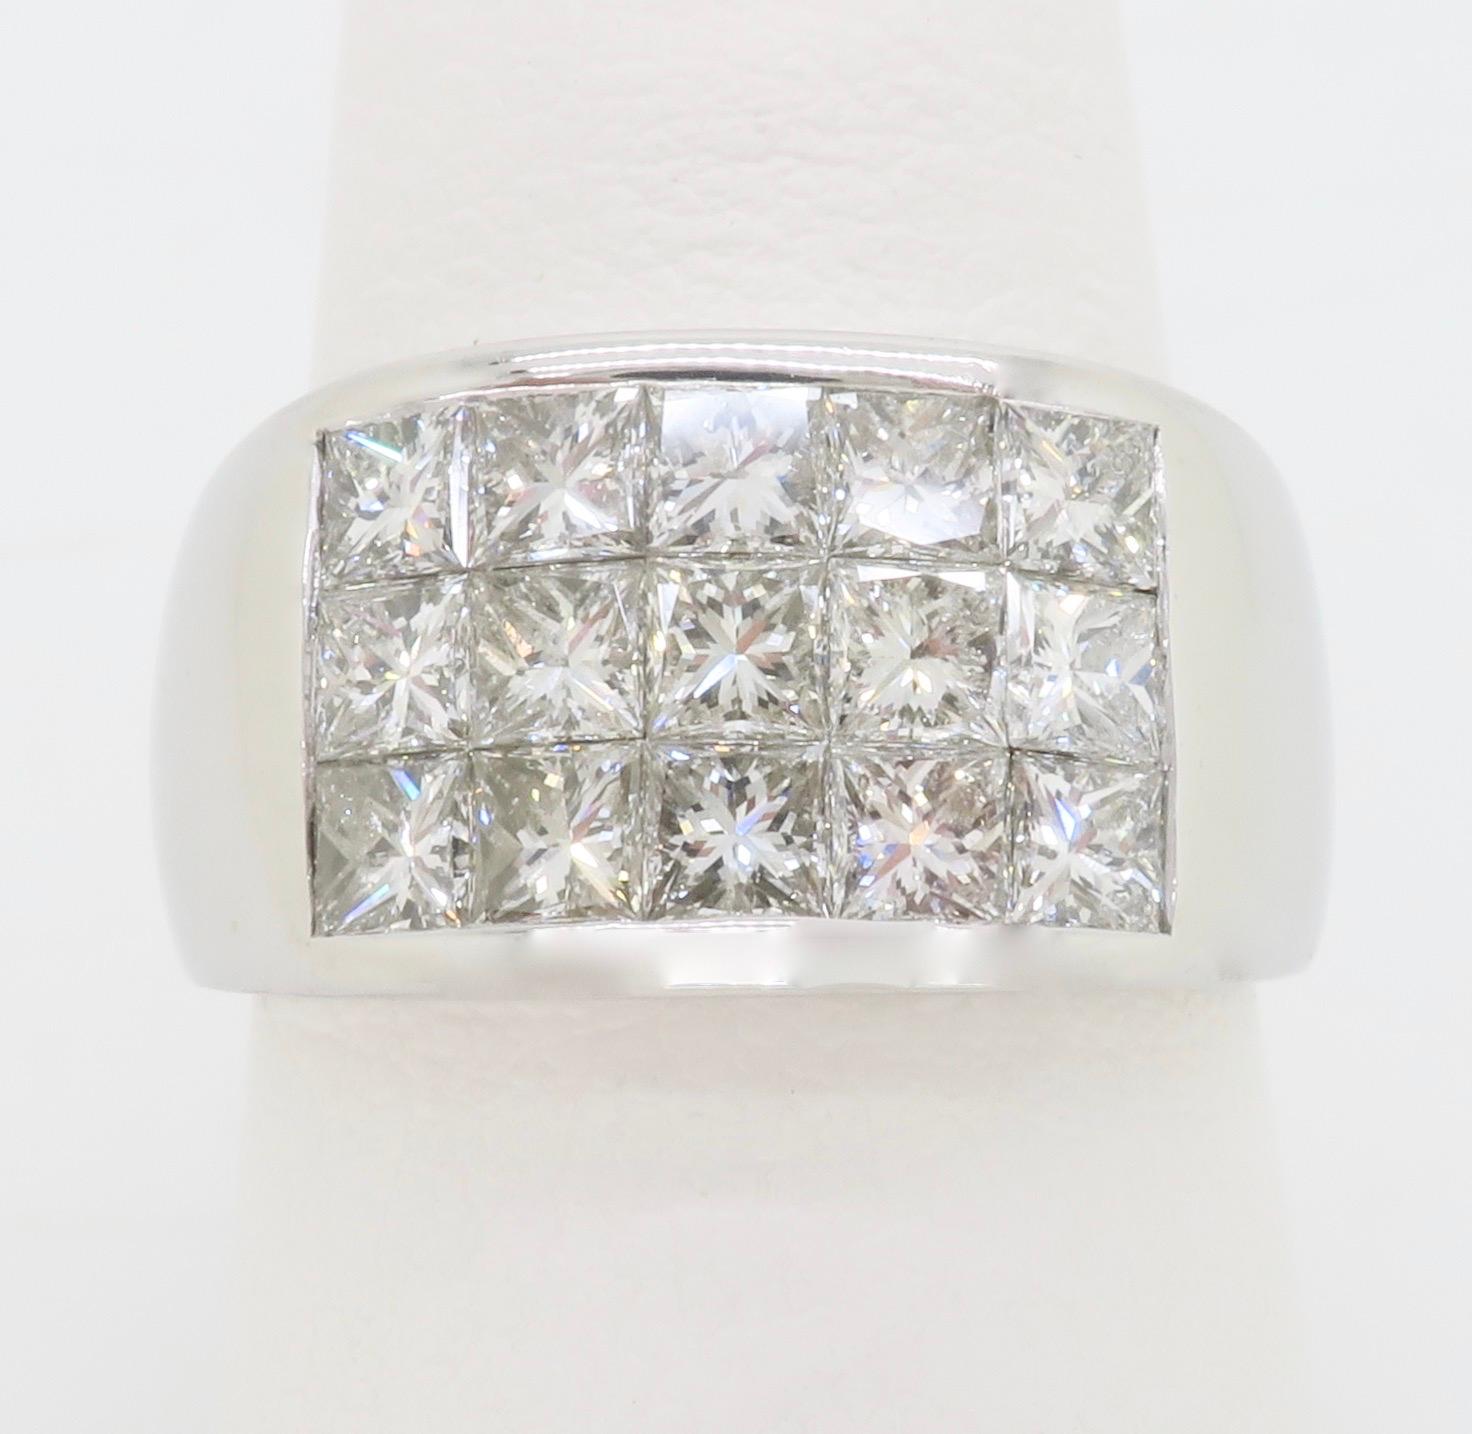 Brilliant precision set princess cut diamond ring made in 18k white gold. 

Diamond Cut: Princess Cut
Total Diamond Carat Weight: Approximately 2.58CTW
Average Diamond Color: F-H
Average Diamond Clarity: VS-SI
Metal: 18k White Gold
Ring Size: 6 -